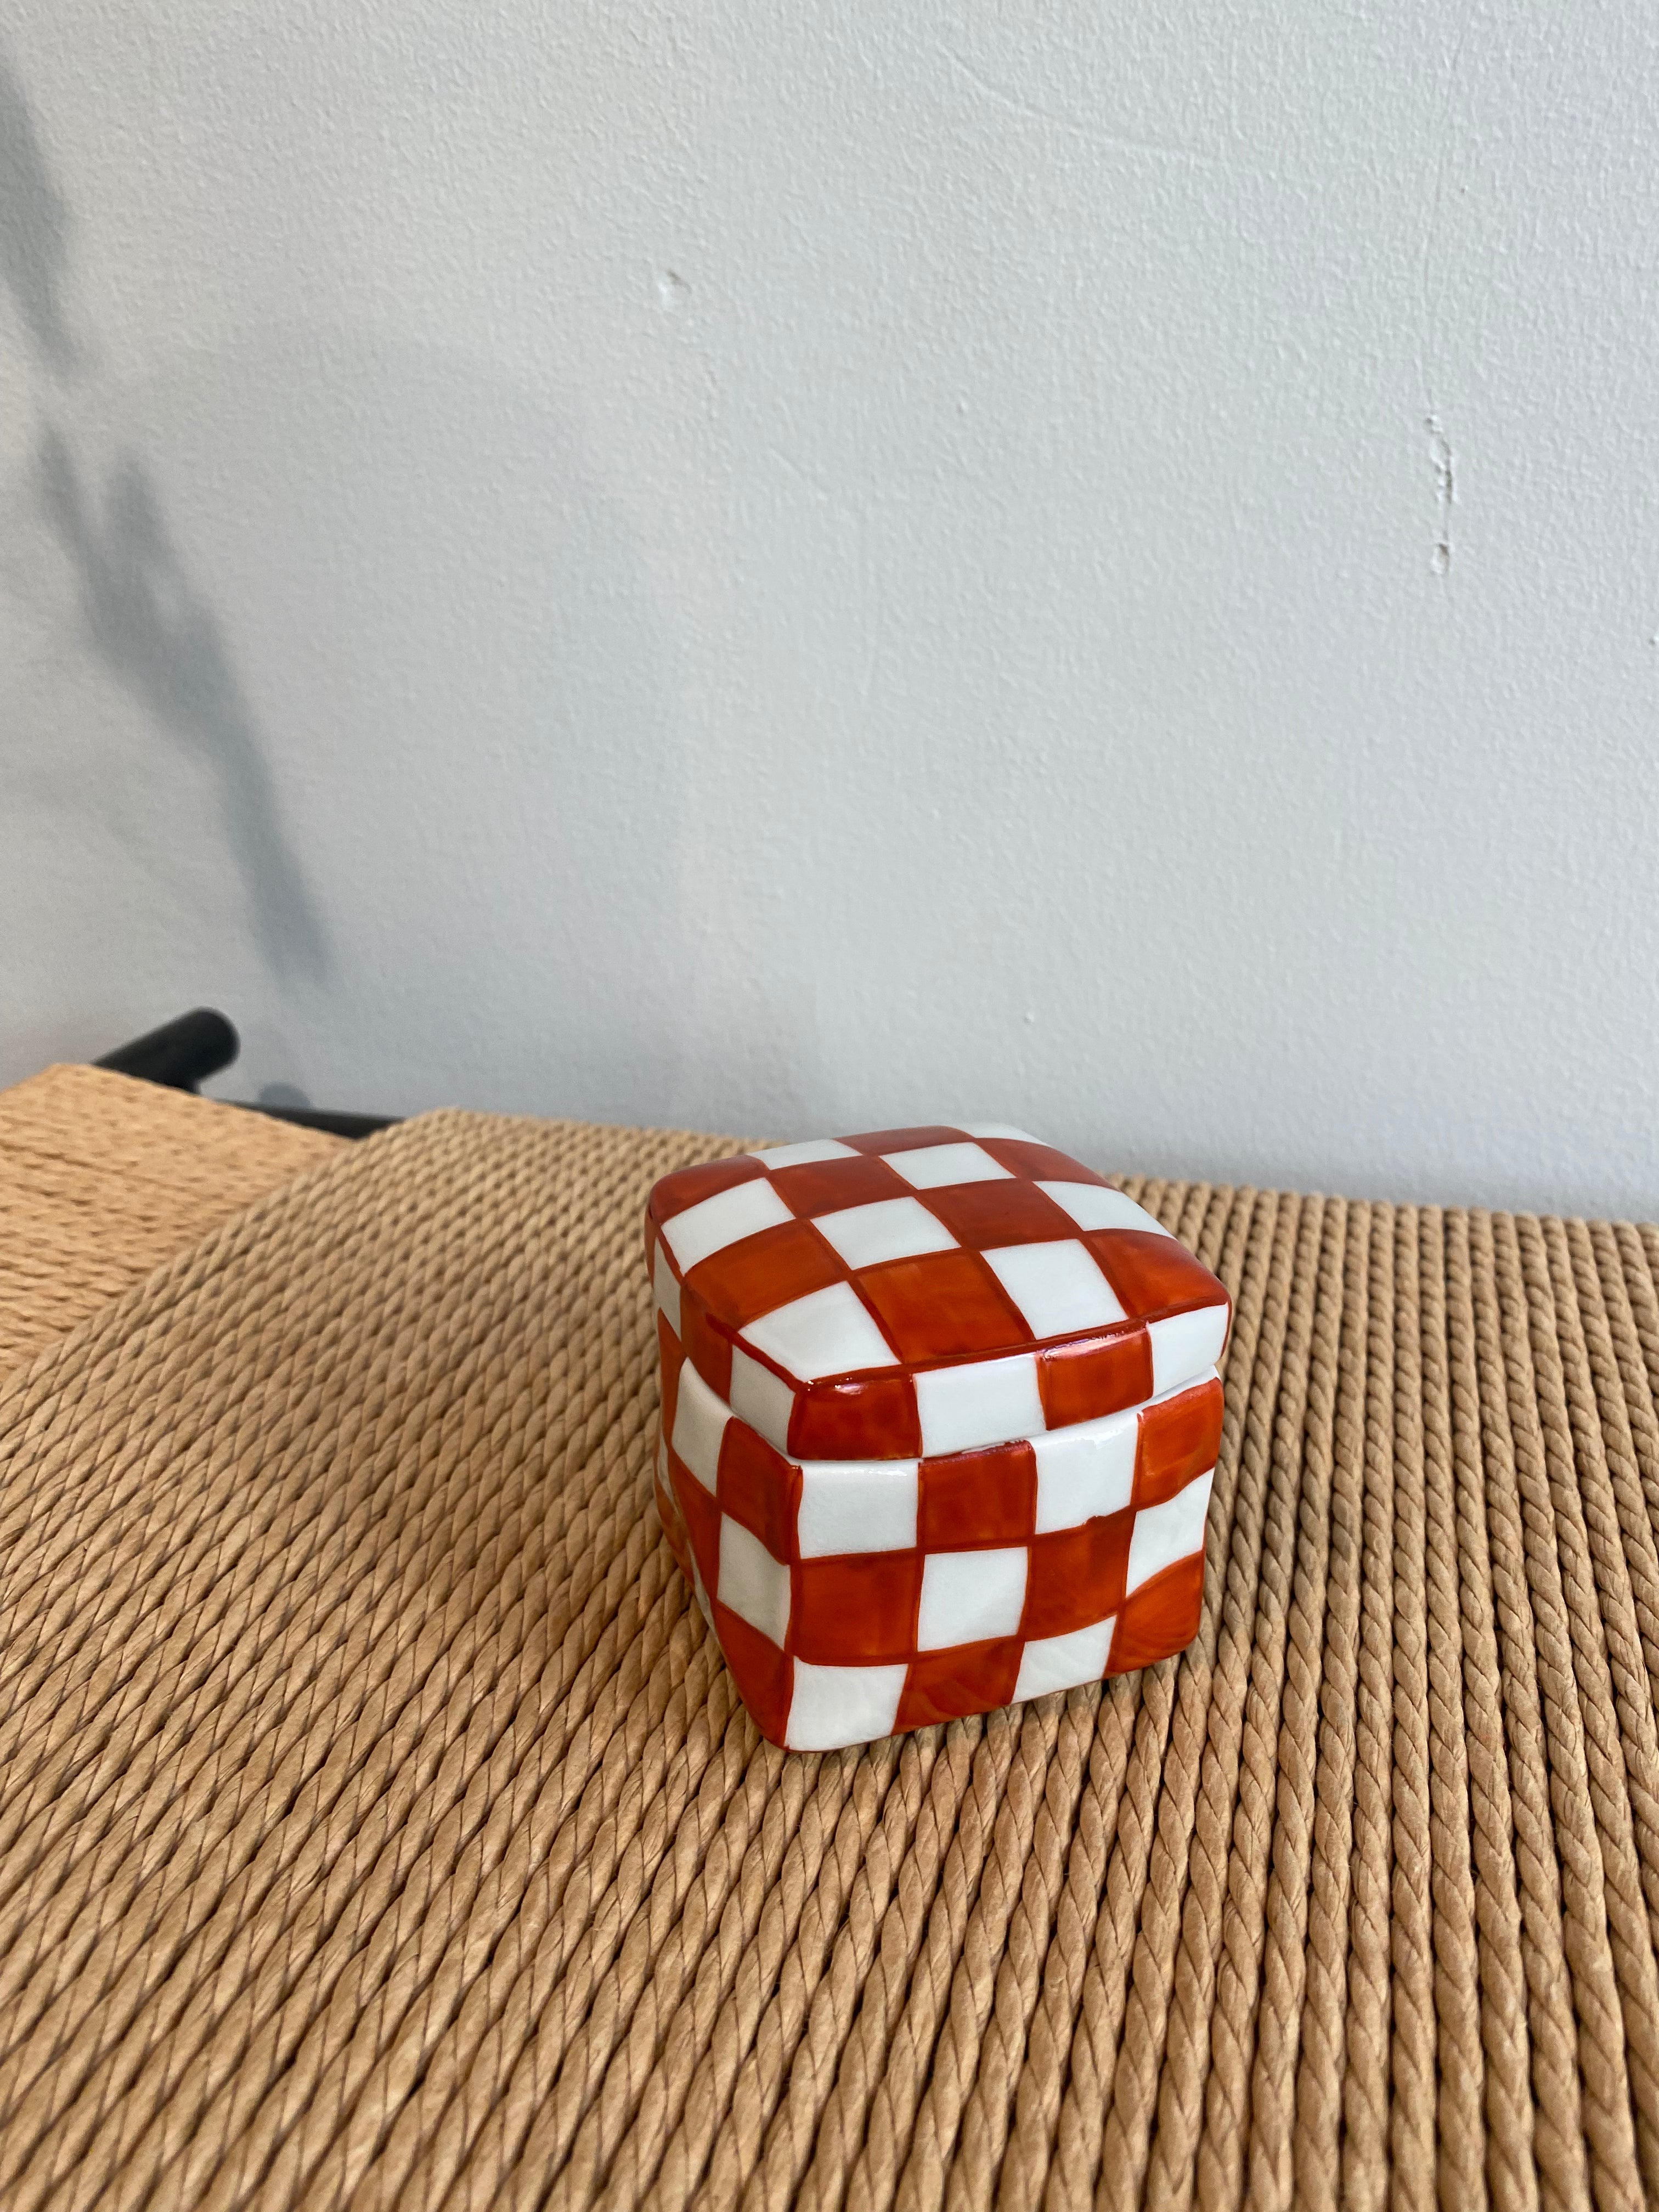 Handmade lidded jar with red/white checkered glaze